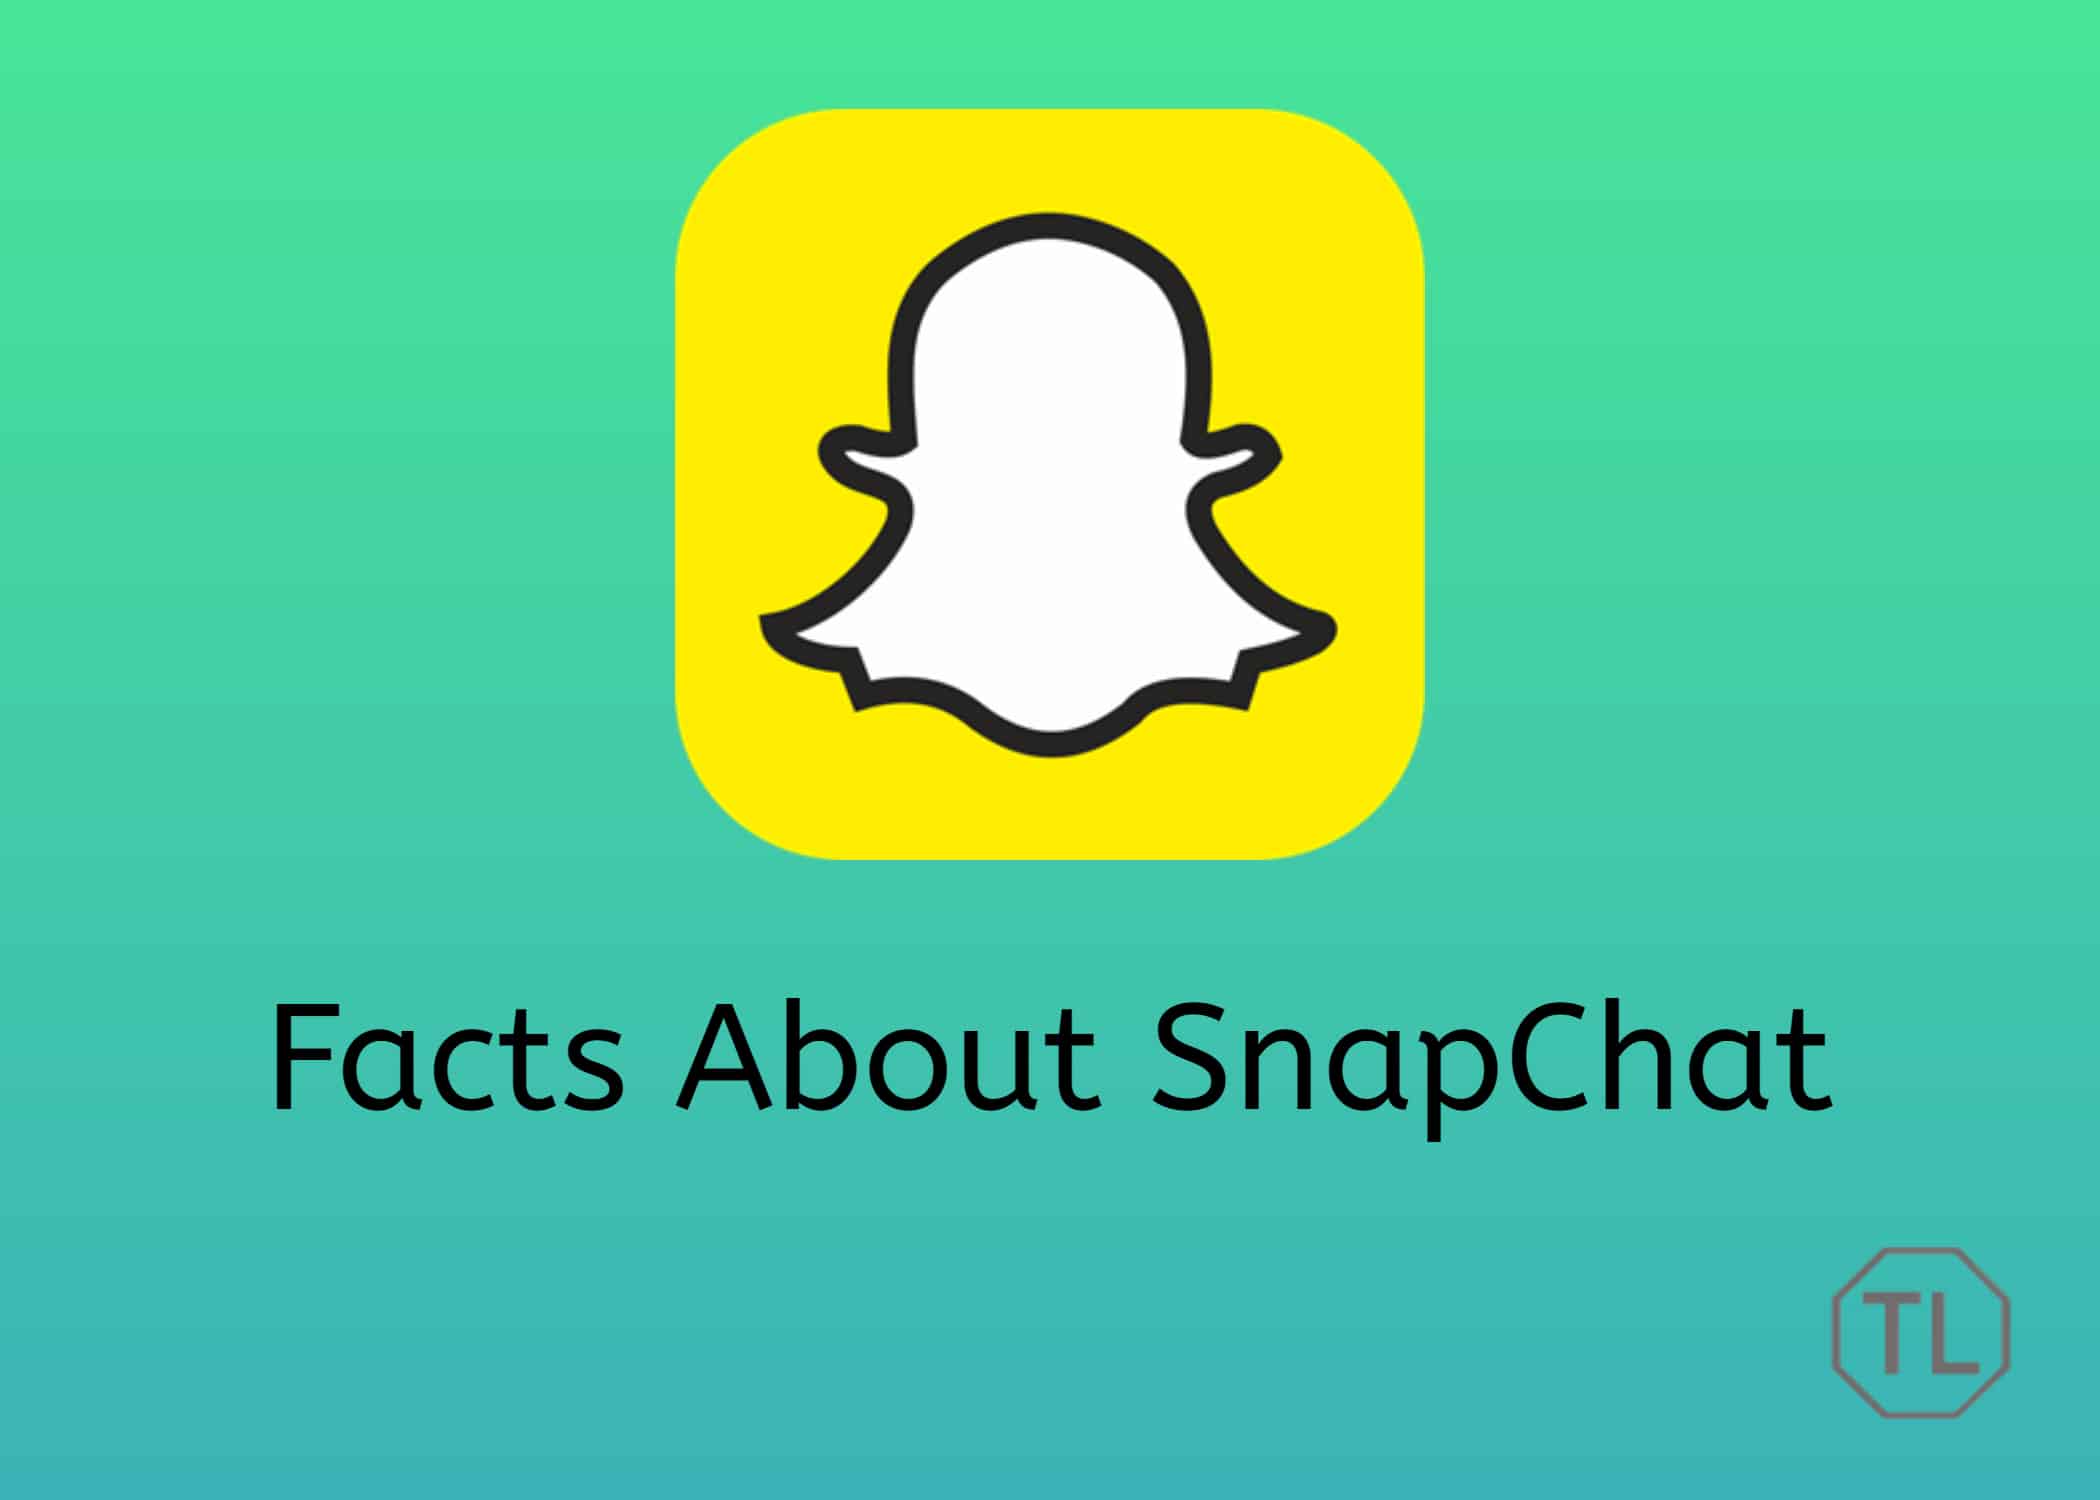 SnapChat facts